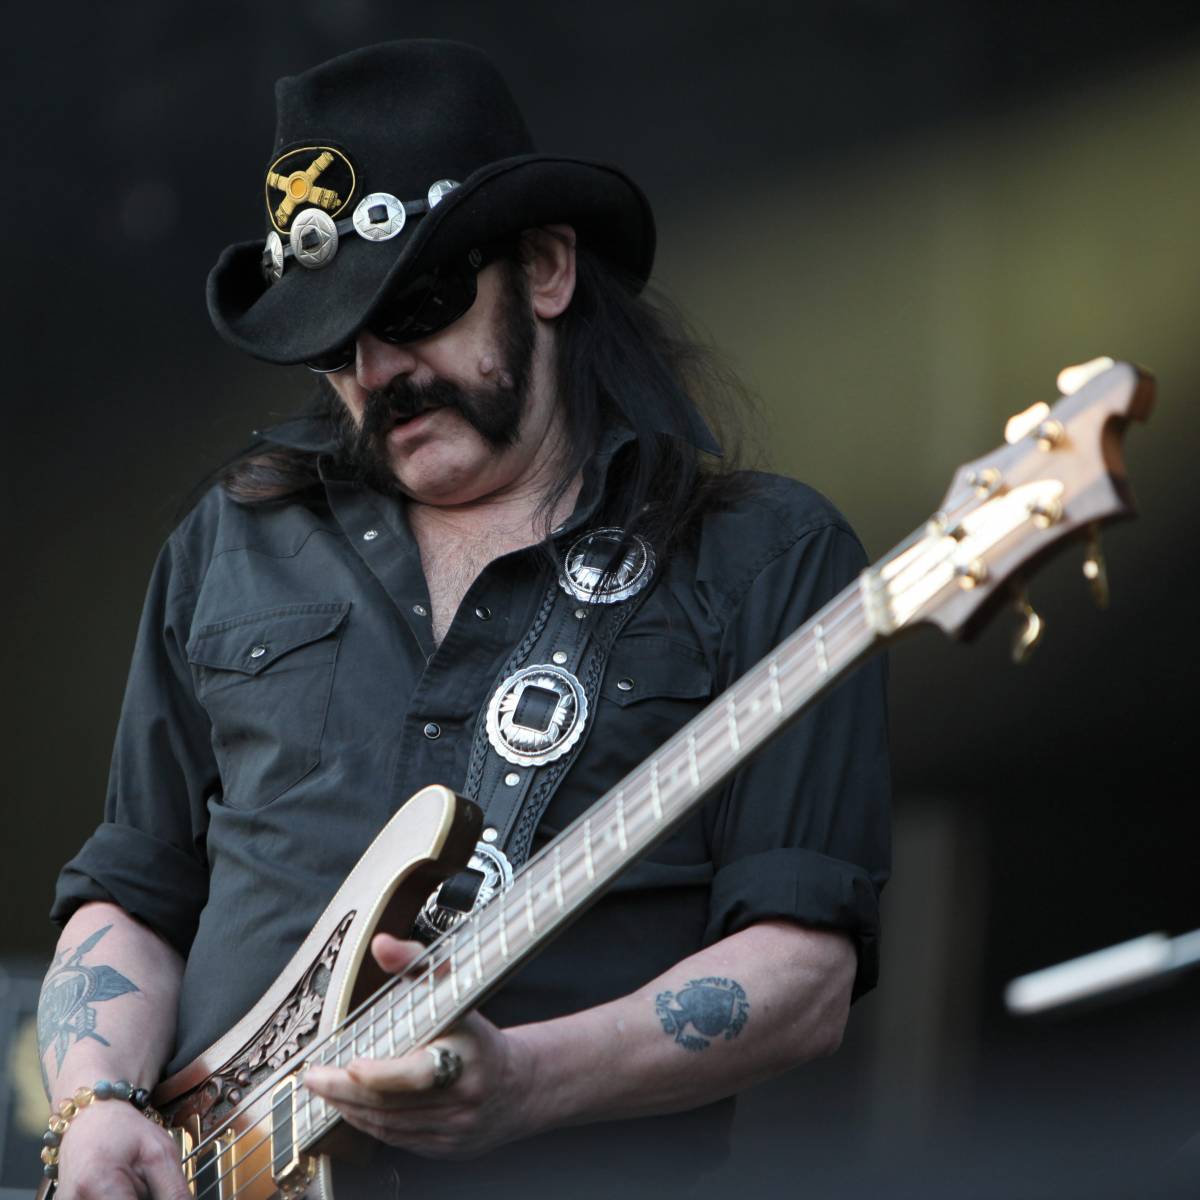 Lemmy e gli ultimi mohicani: funerale da eccessi rock